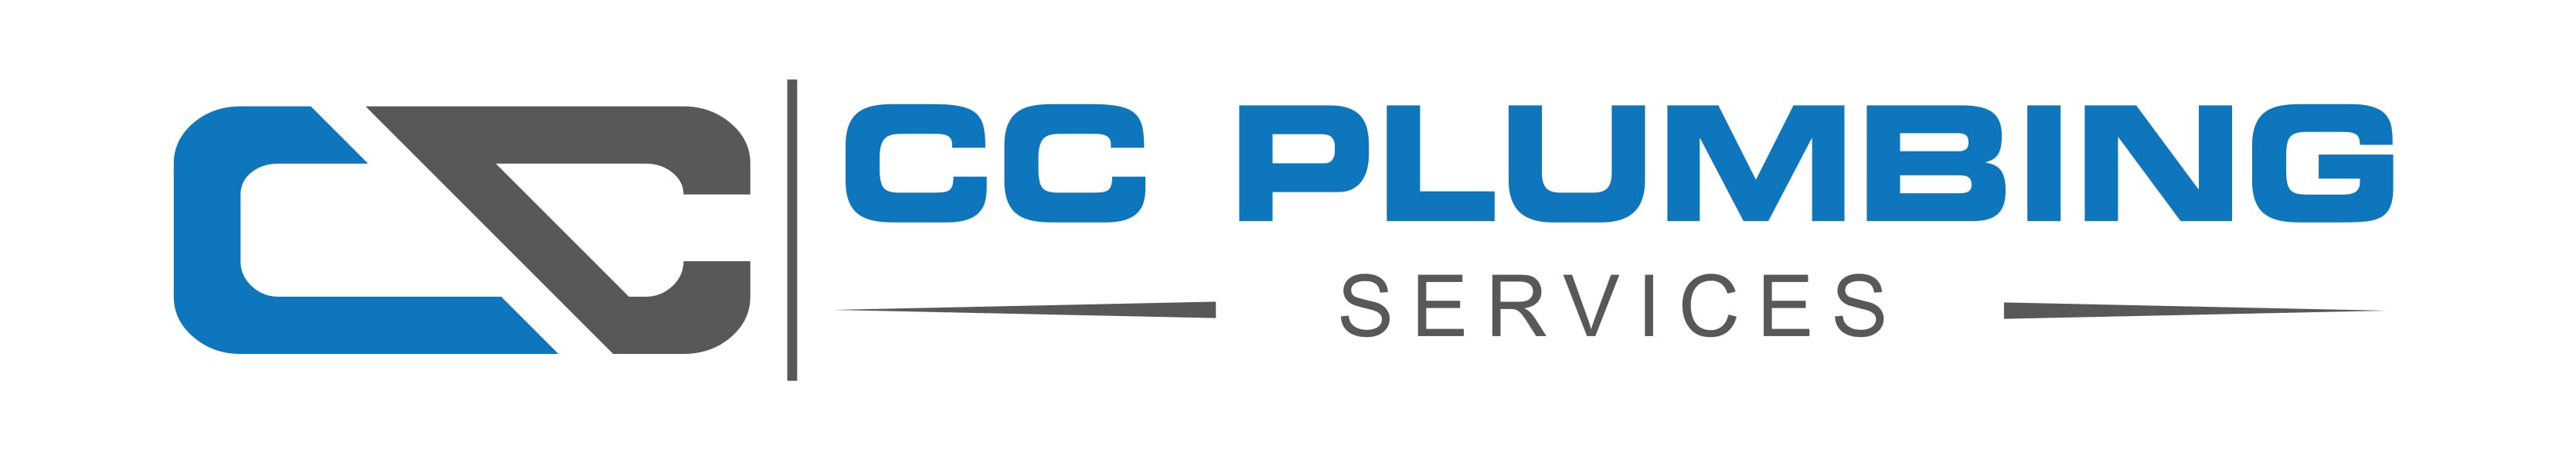 CC Plumbing Services